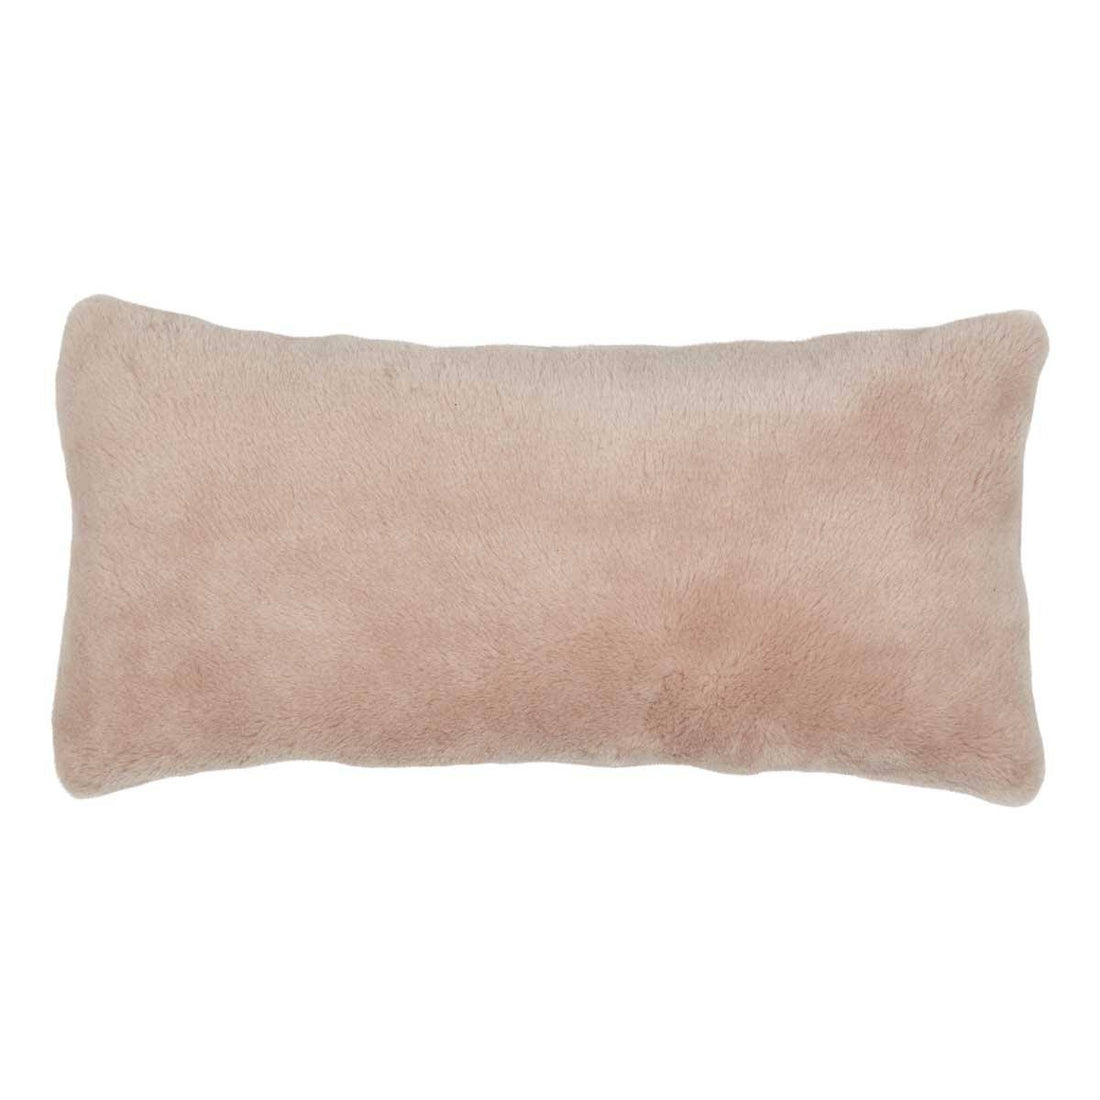 Cushion of New Zealand Lambskin wool | 28x56 cm.